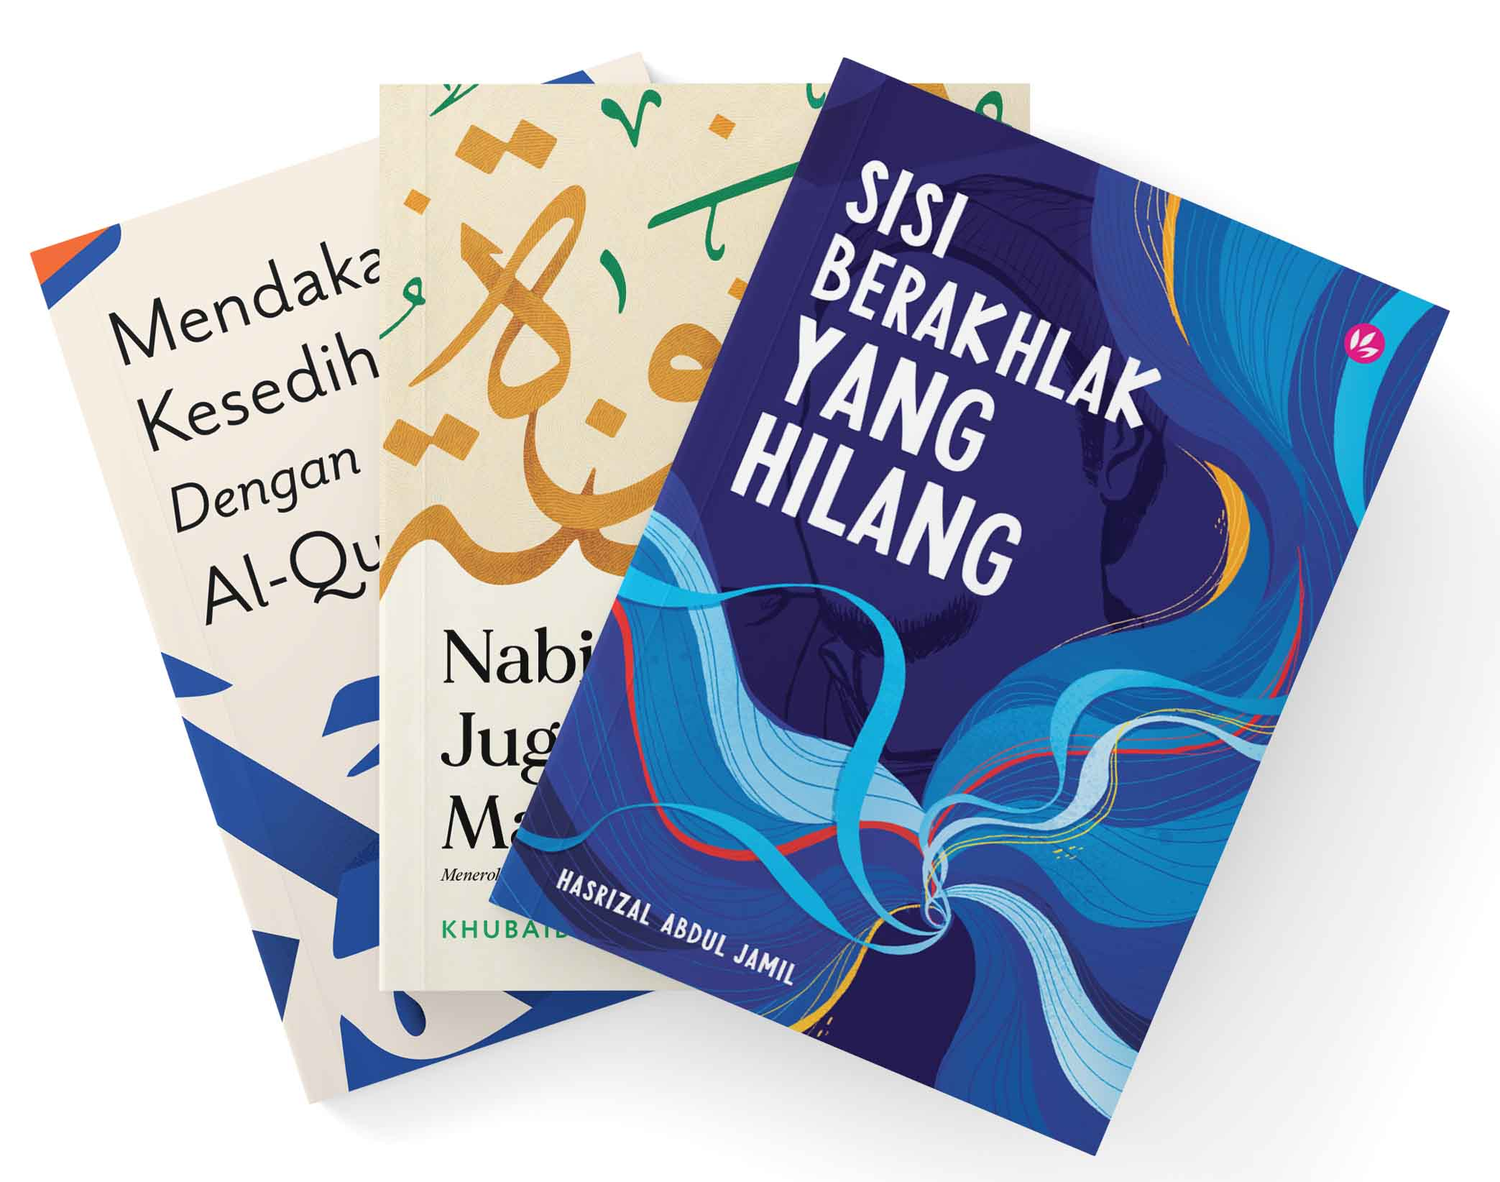 Malay Books